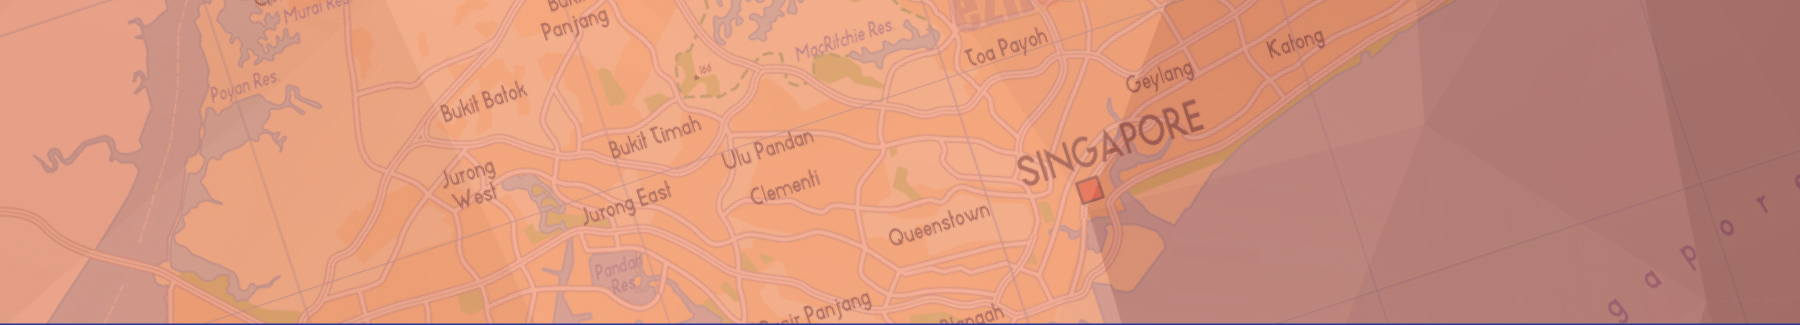 Maps singapore marine guide